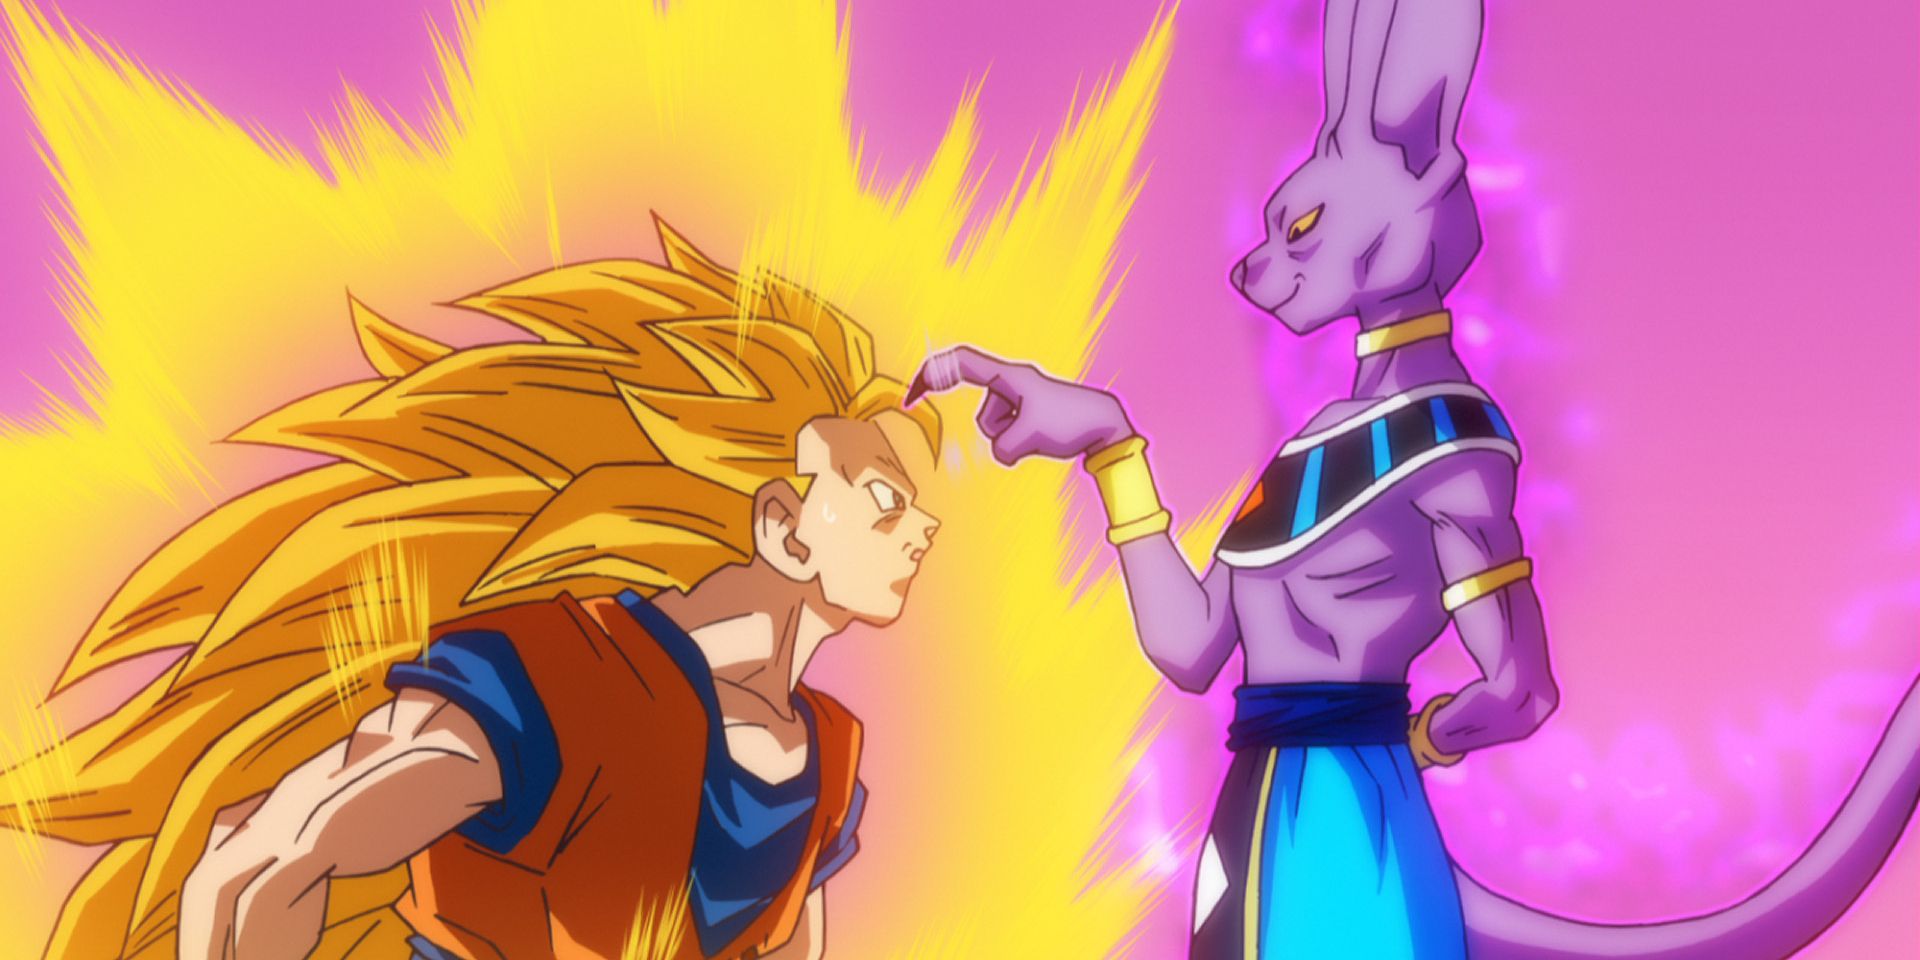 Beerus taunts Goku _Dragon Ball Super